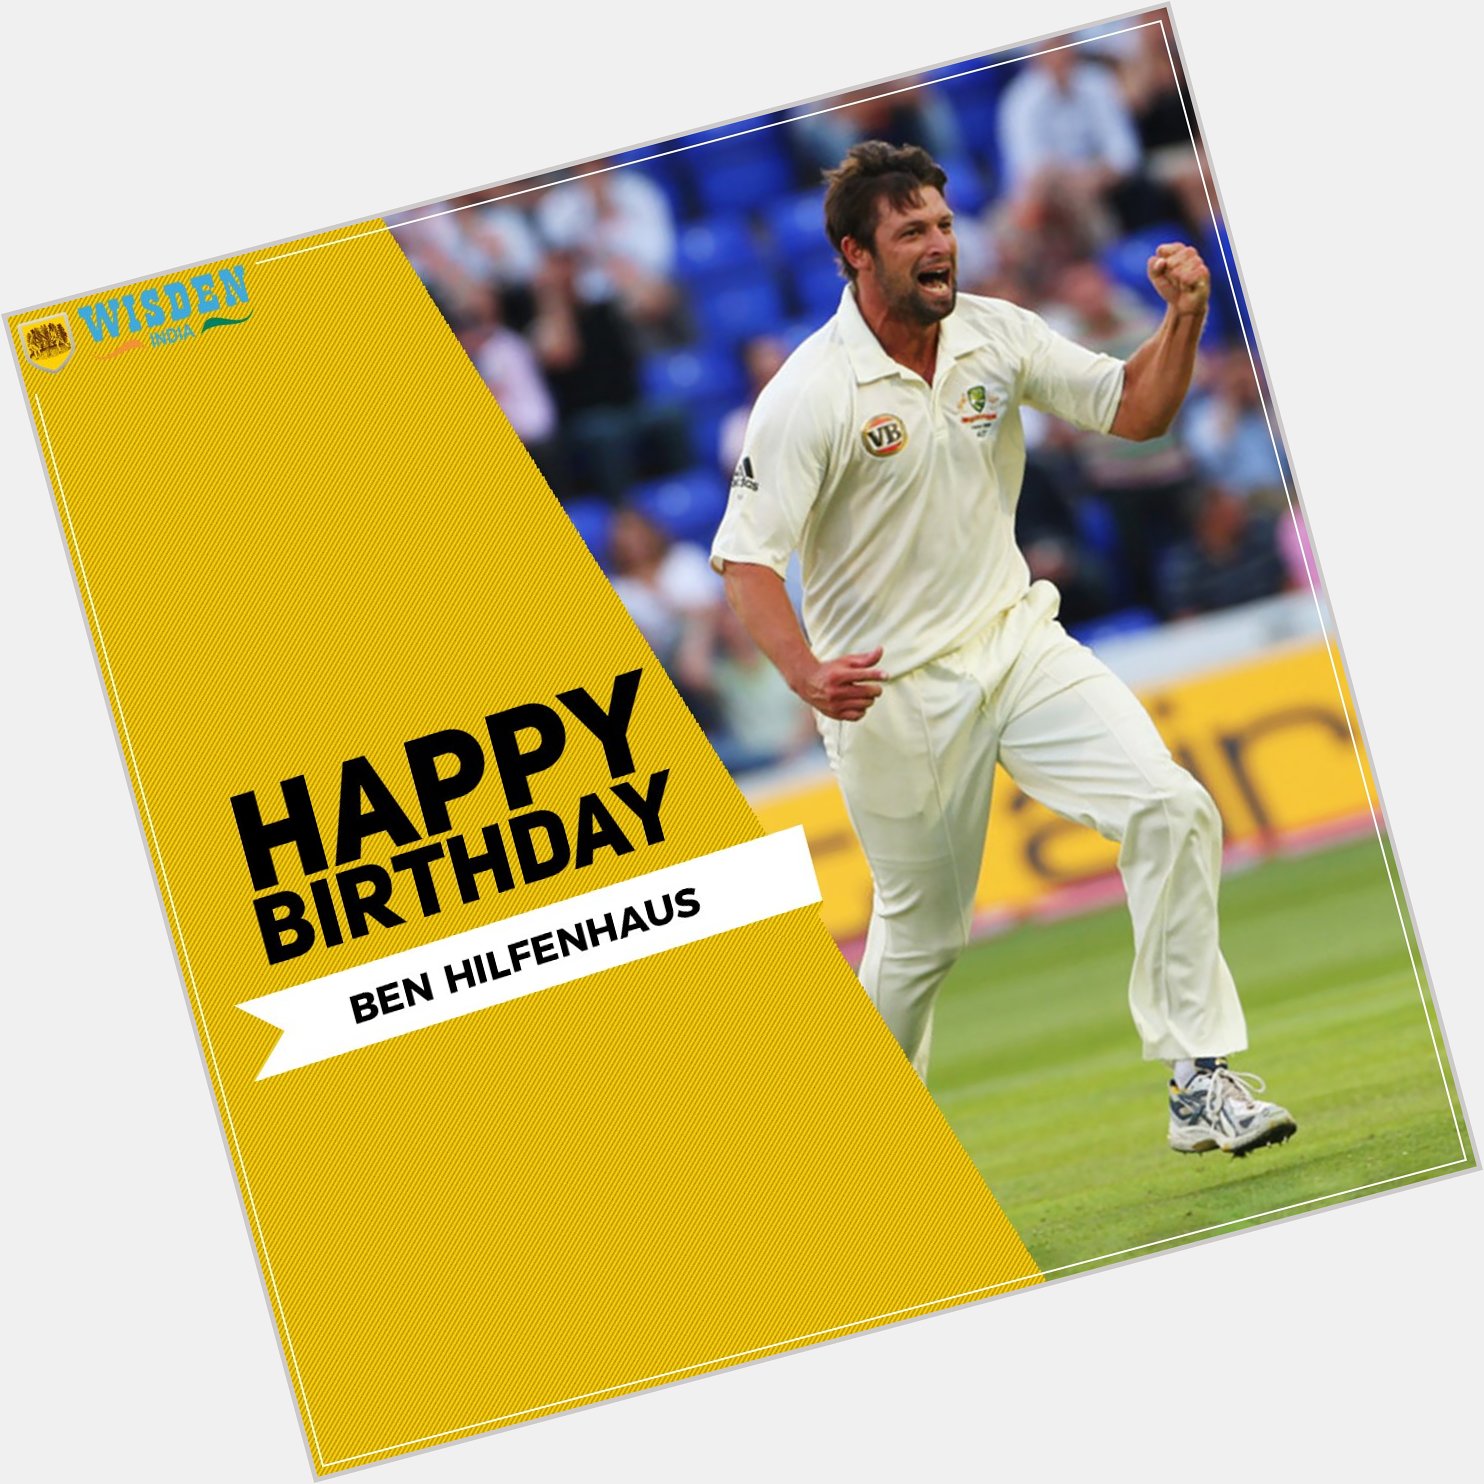 Wishing a happy Birthday to former Australian bowler Ben Hilfenhaus! 